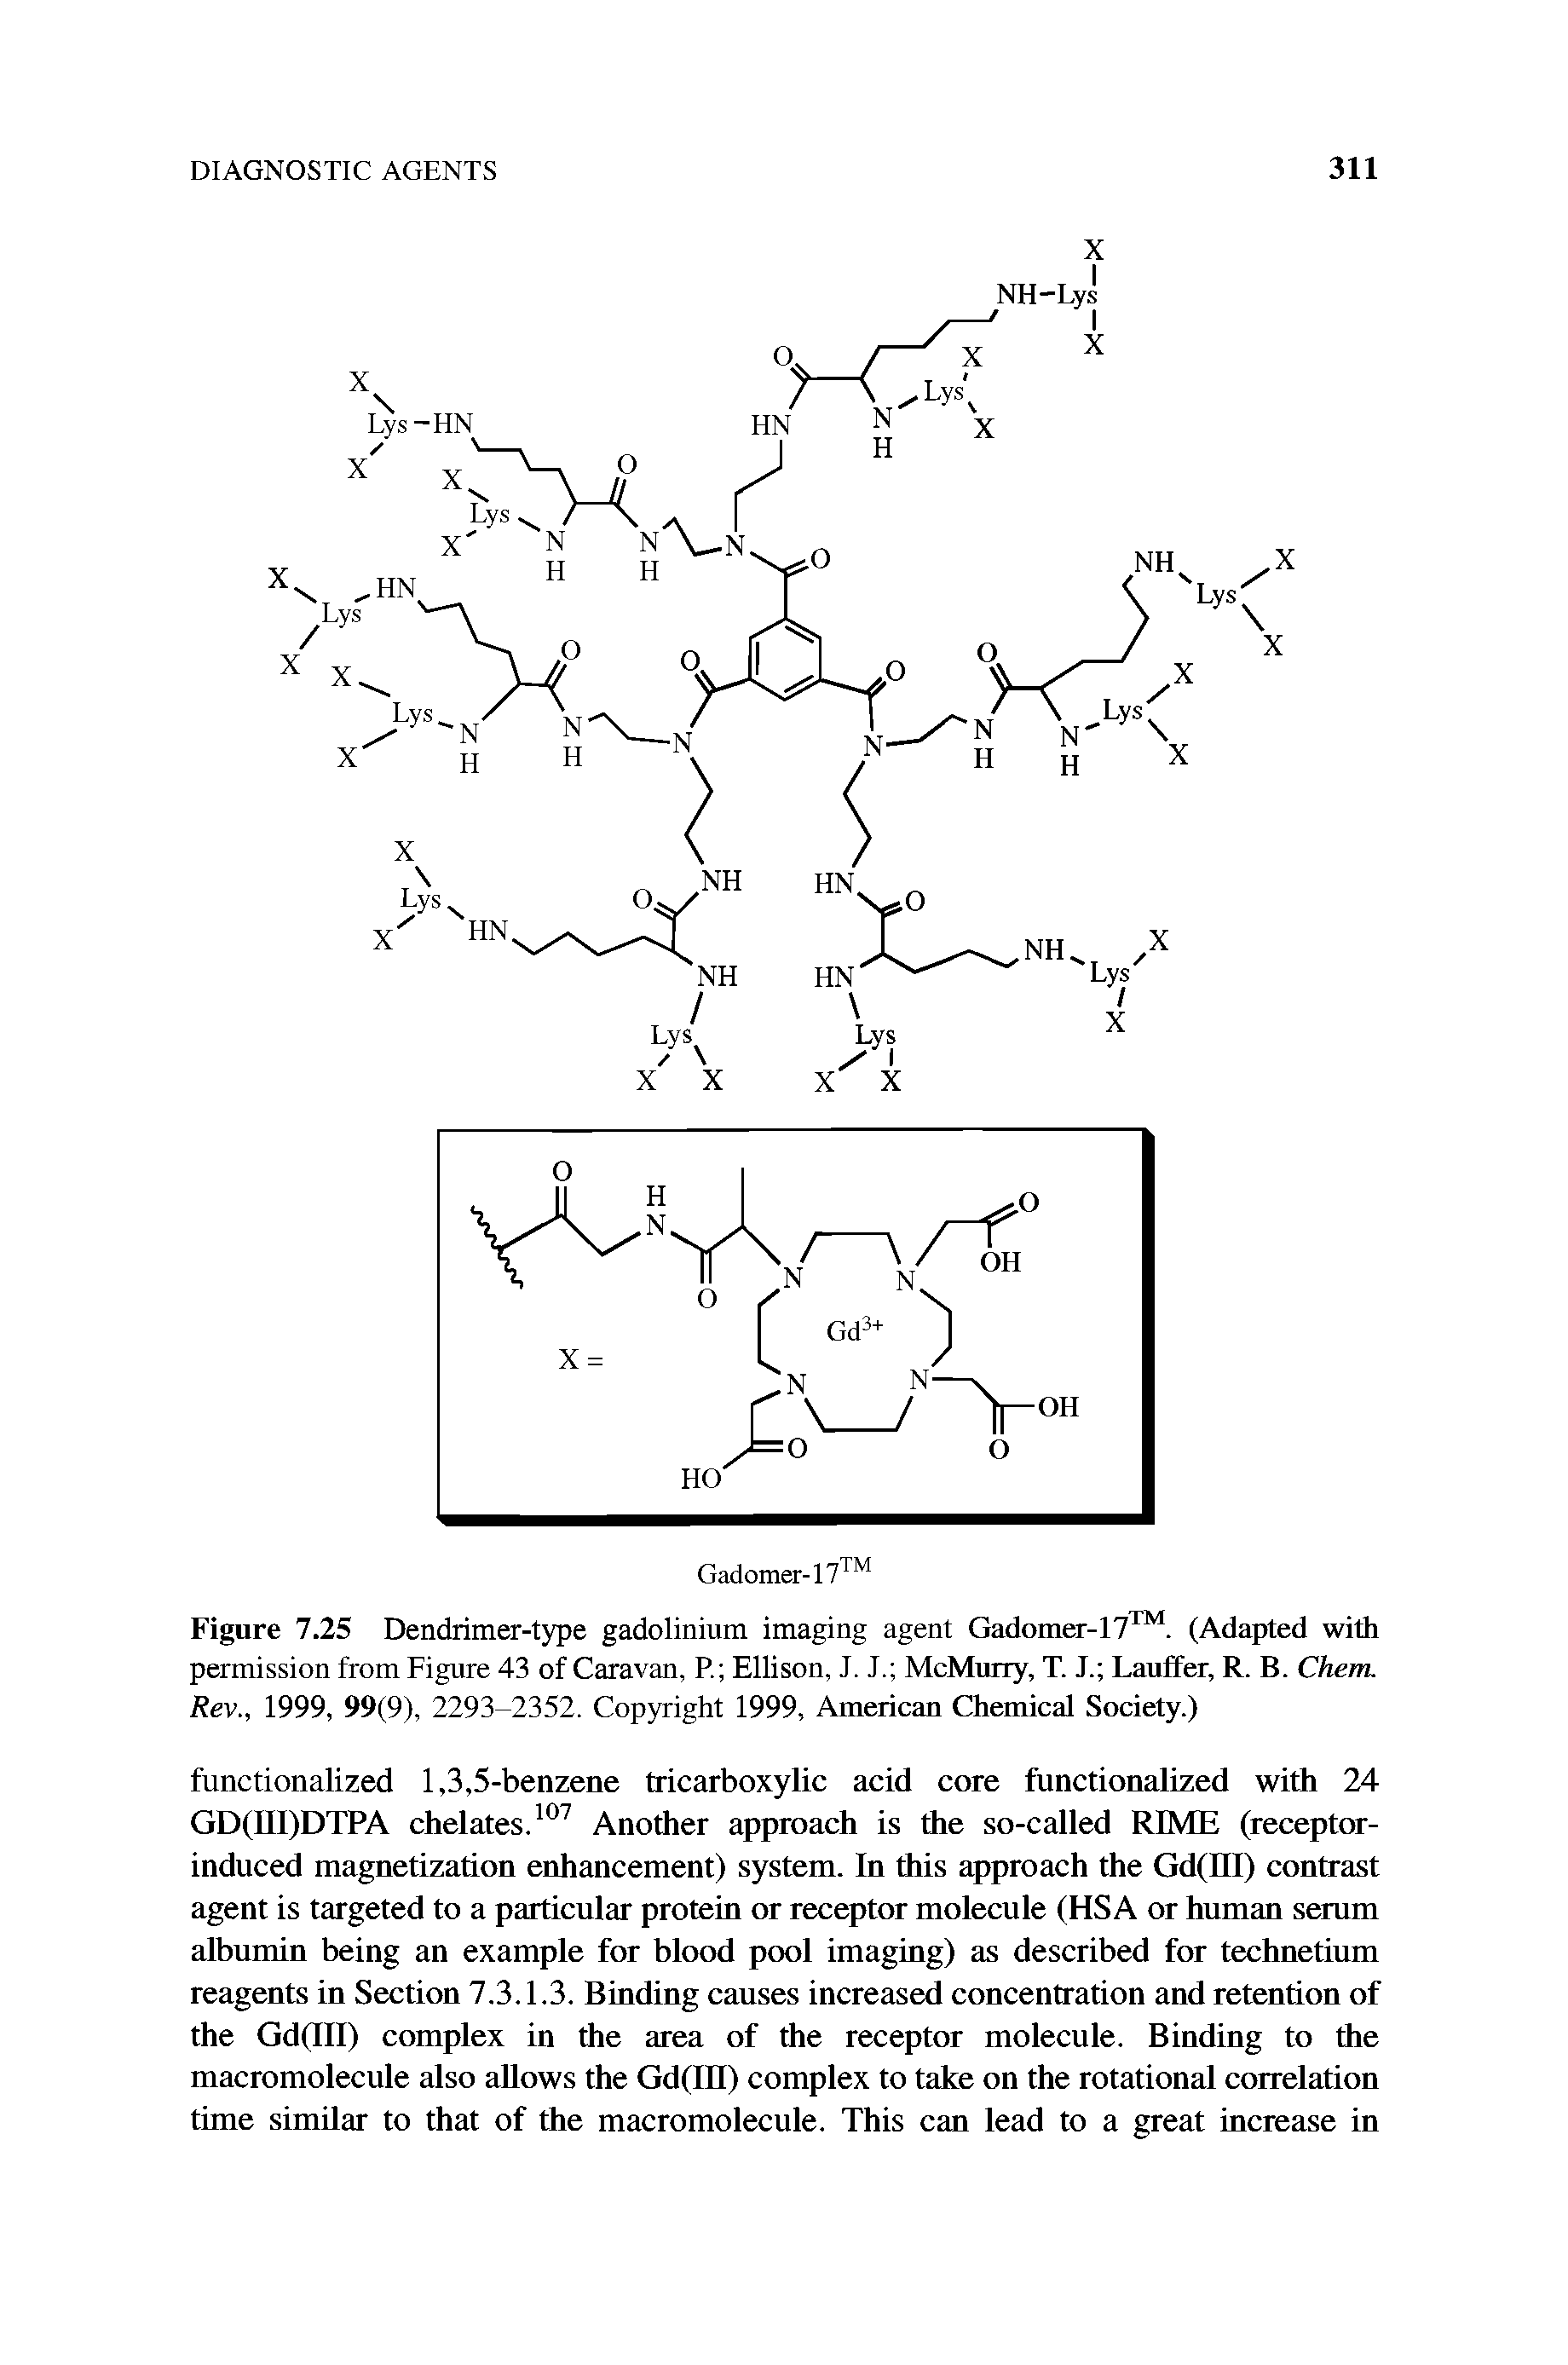 Figure 7.25 Dendrimer-type gadolinium imaging agent Gadomer-17 . (Adapted with permission from Figure 43 of Caravan, P. Ellison, J. J. McMurry, T. J. Lauffer, R. B. Chem. Rev., 1999, 99(9), 2293-2352. Copyright 1999, American Chemical Society.)...